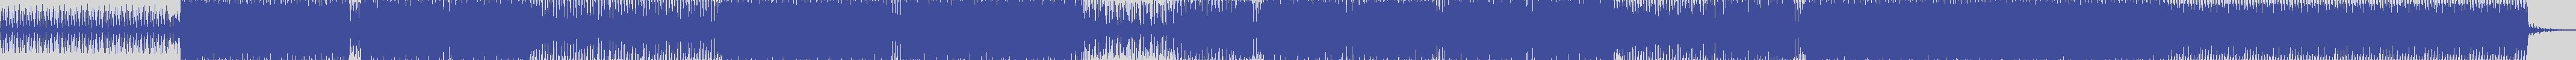 atomic_recordings [AR001] Alexander Faint, Mattias - You Droid [Crazibiza Radio Edit] audio wave form